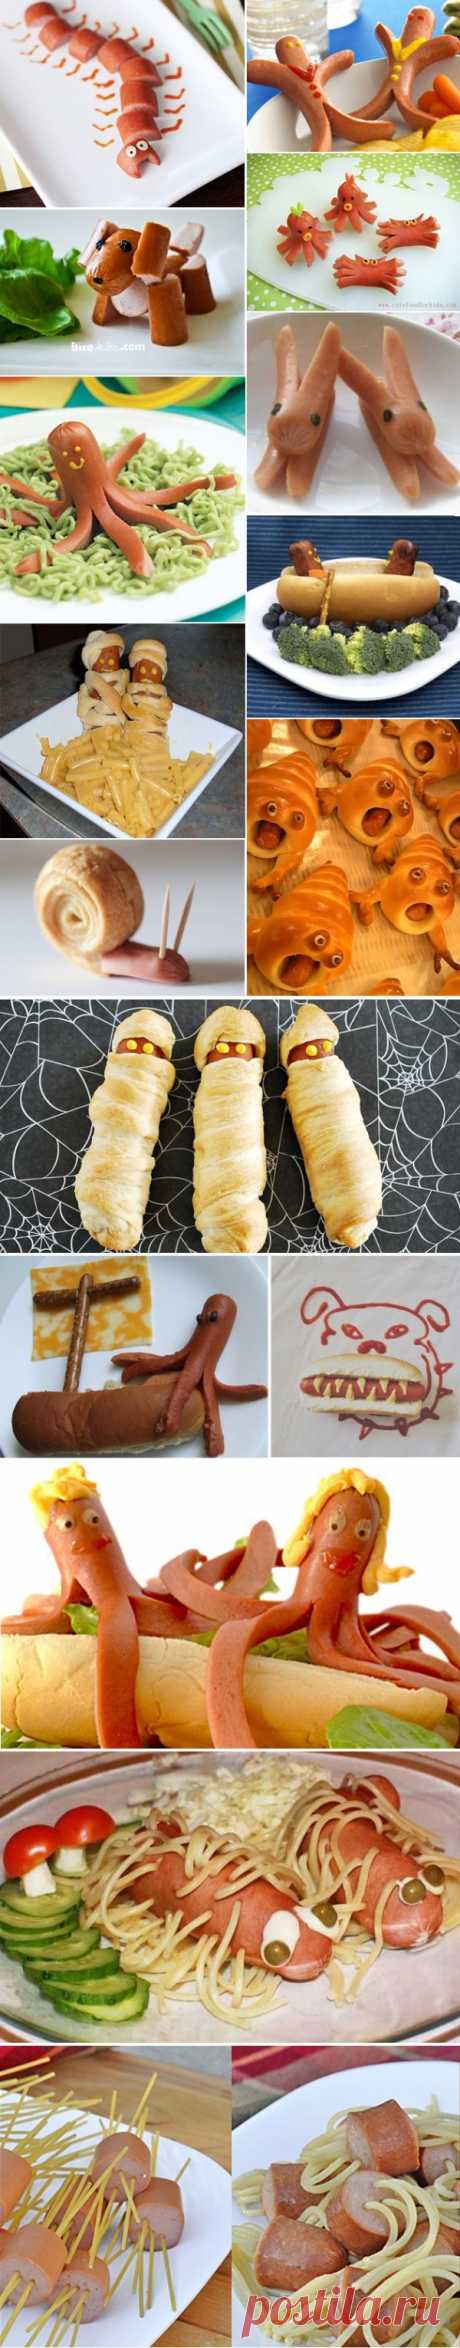 funny-recipes-hot-dogs-sausages-for-kids-children-recetas-divertidas-con-salchichas-para-niños.jpg 630×3,216 pixels